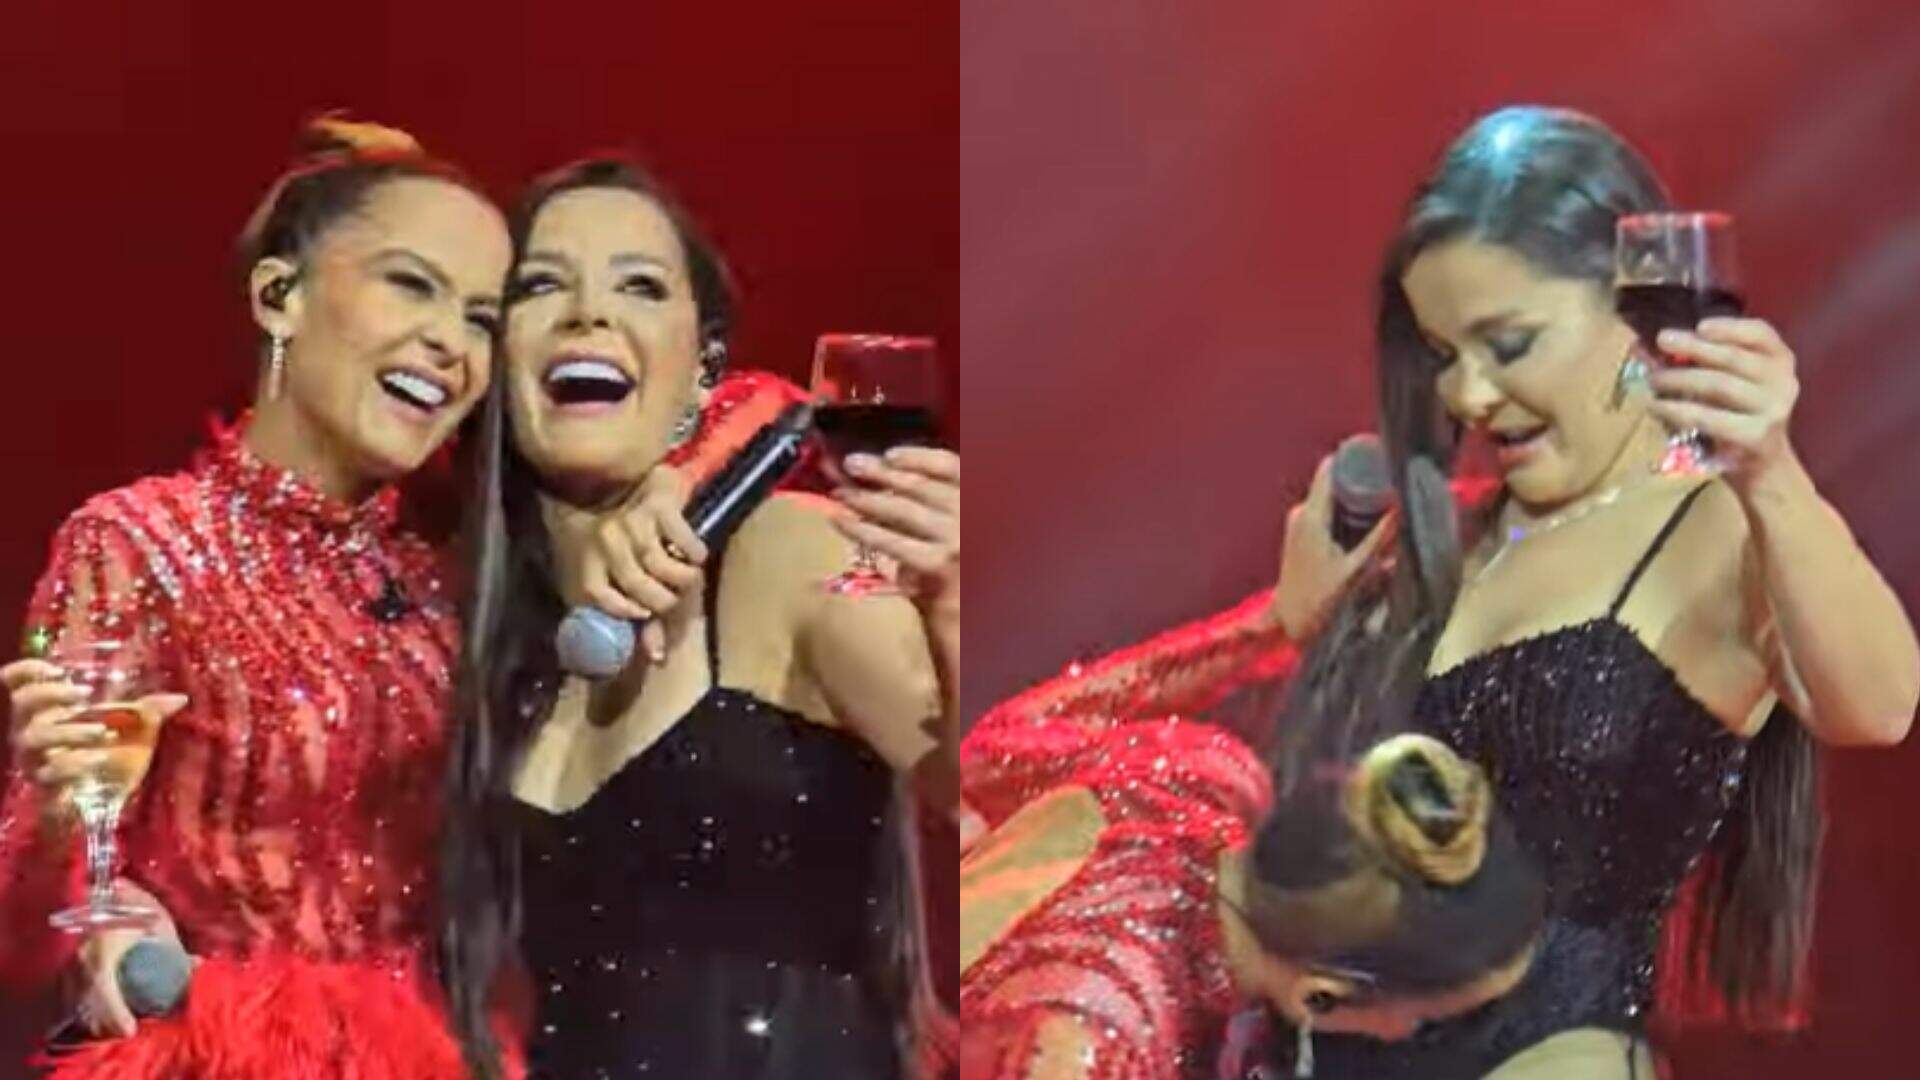 Família vai aumentar? Maiara beija barriga de Maraisa durante show e cria rumores de gravidez - Metropolitana FM